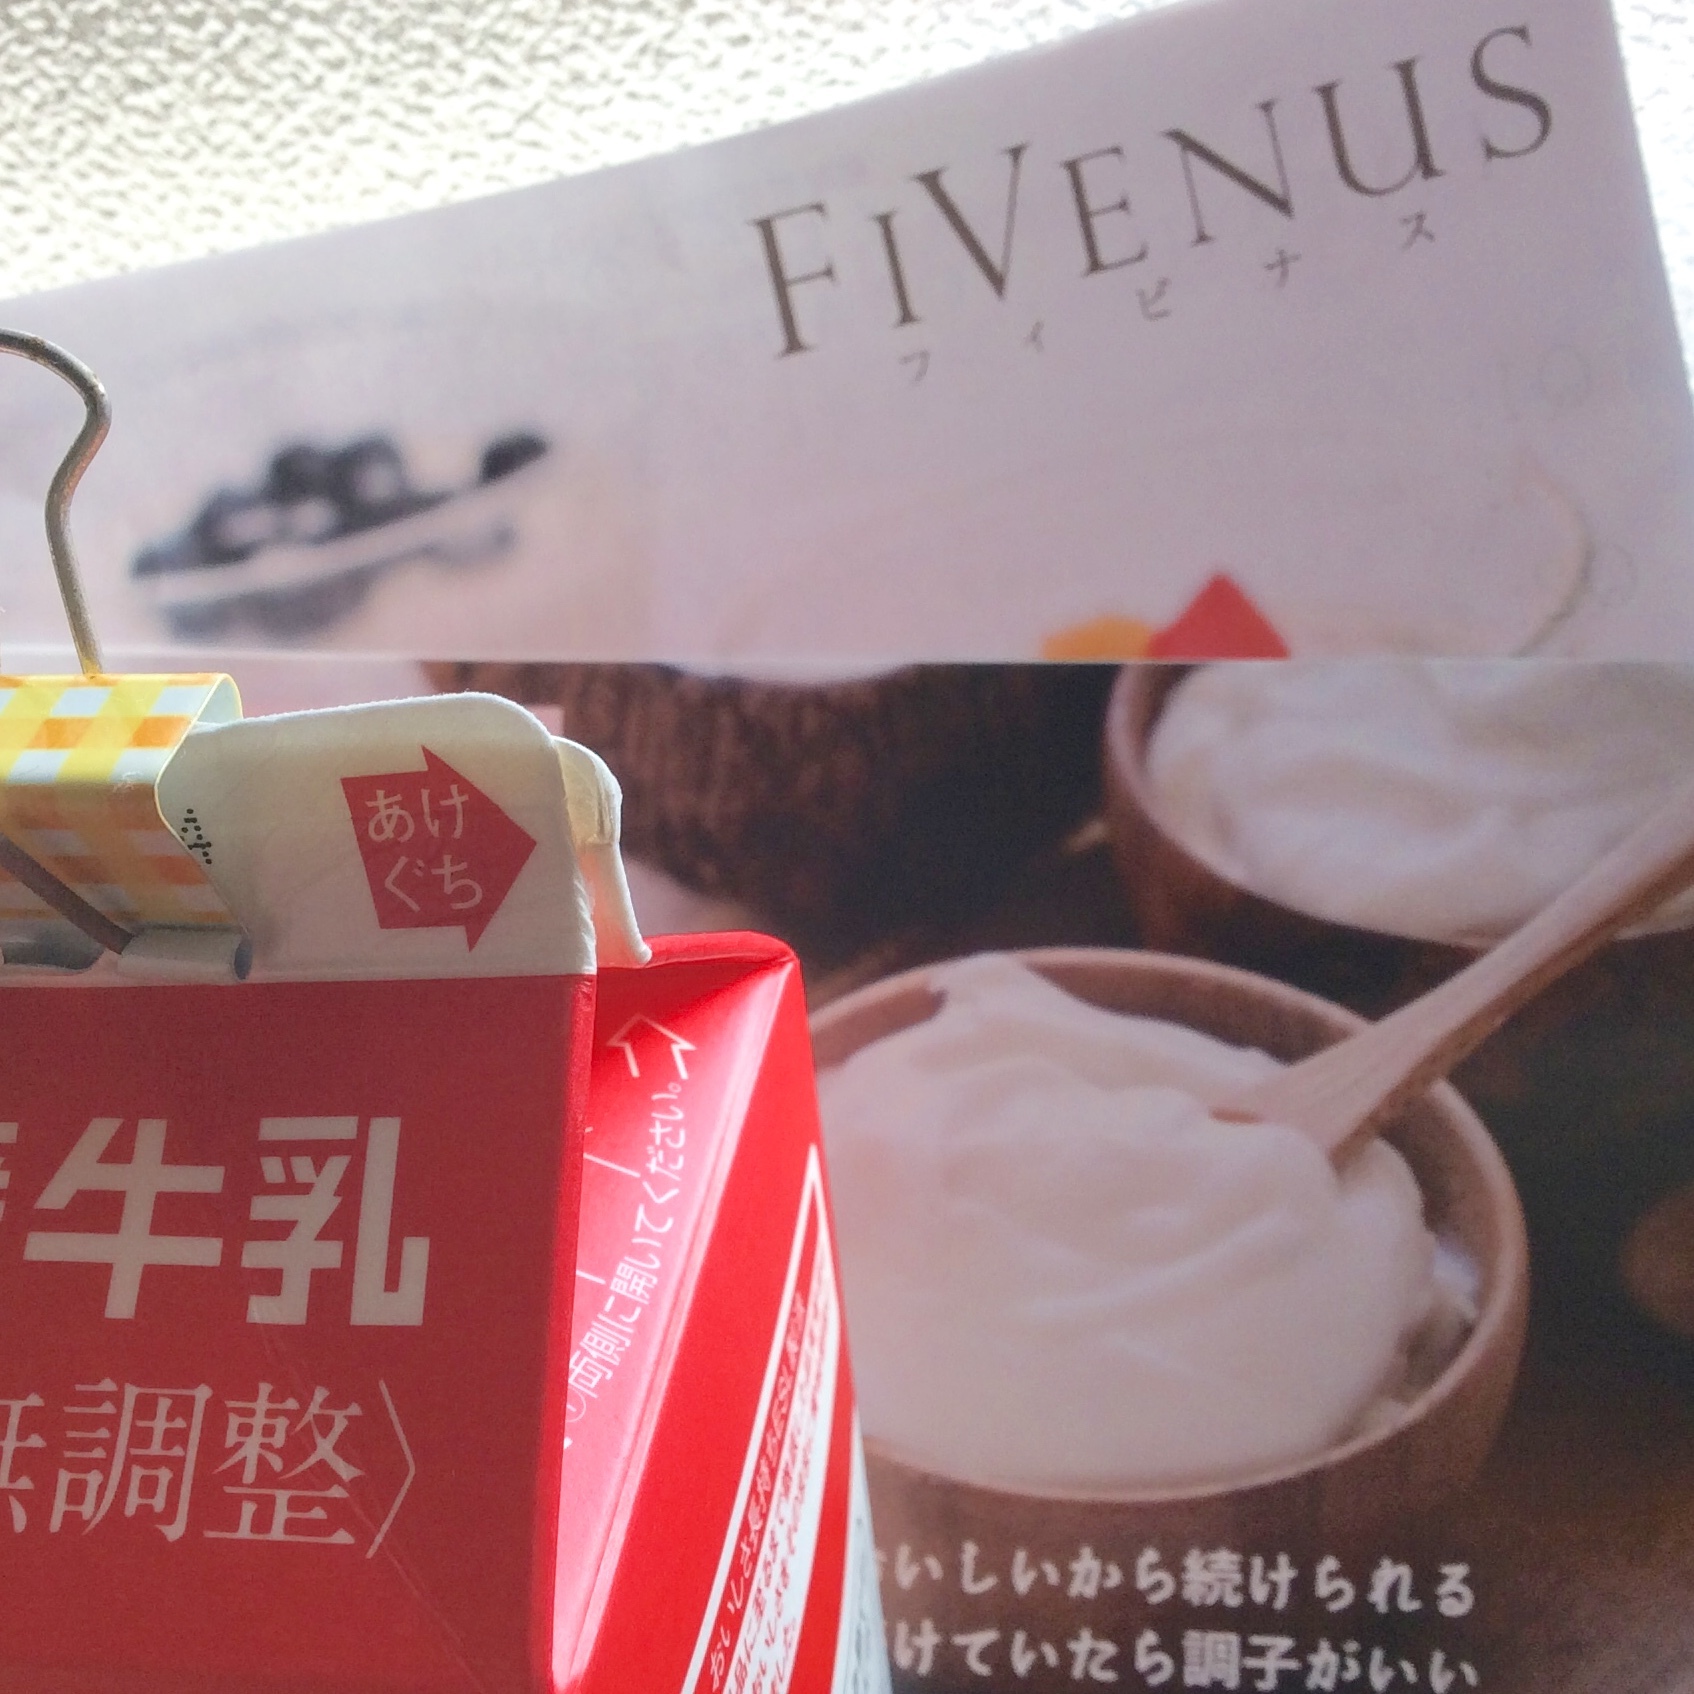 FiVenus 5包パック1,000円実感セット3-6 (1)